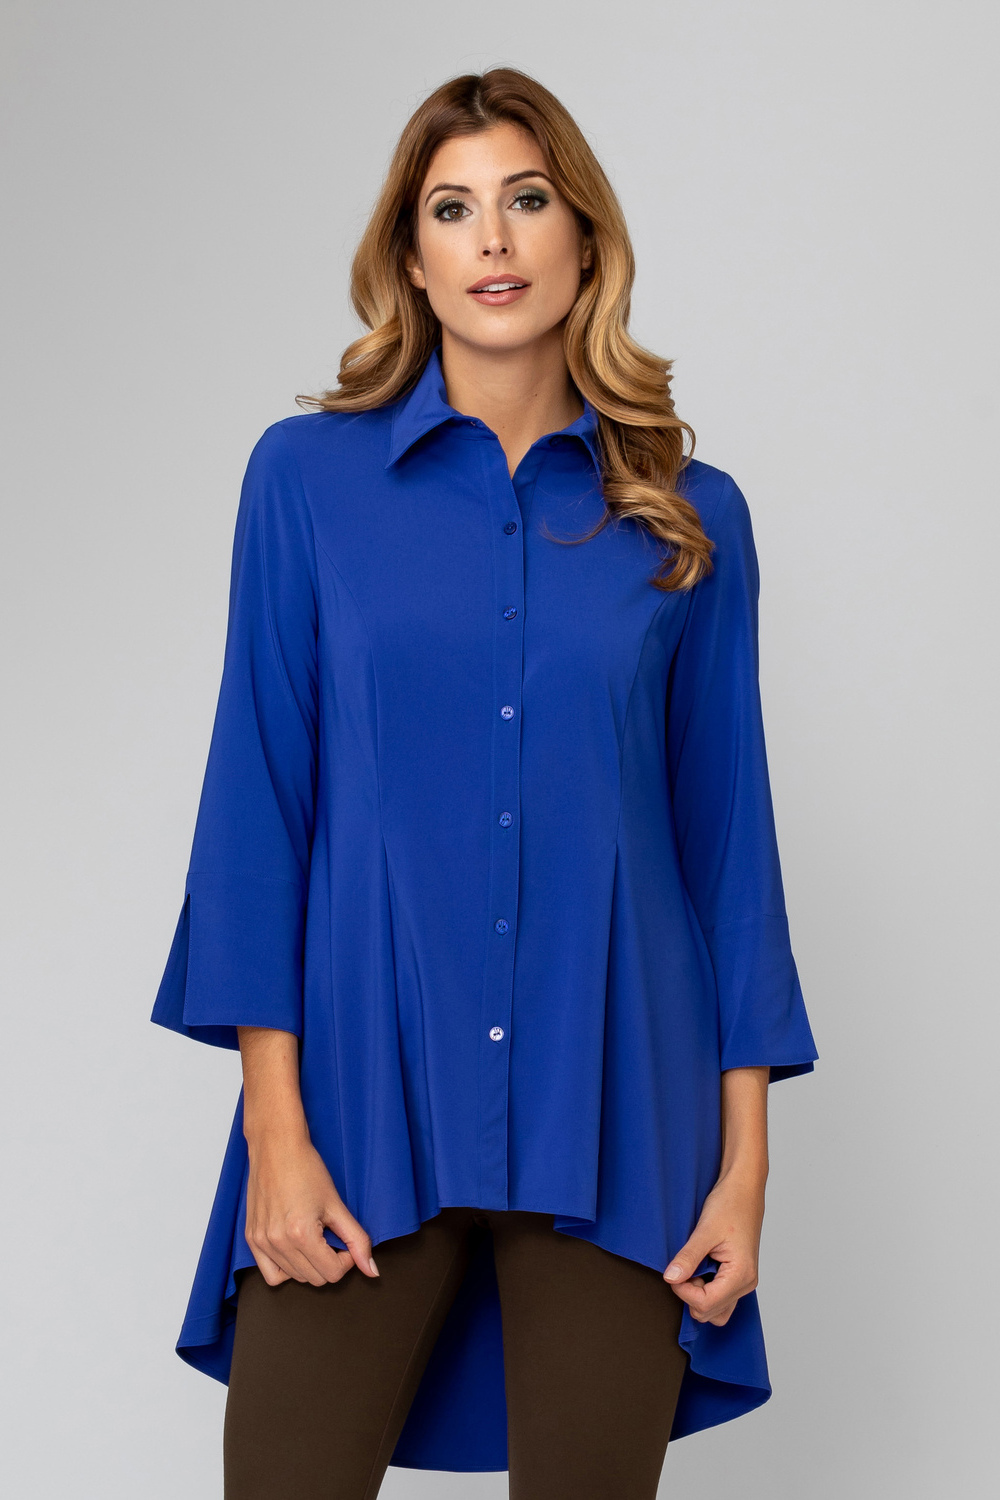 Joseph Ribkoff blouse style 193418. Bleu